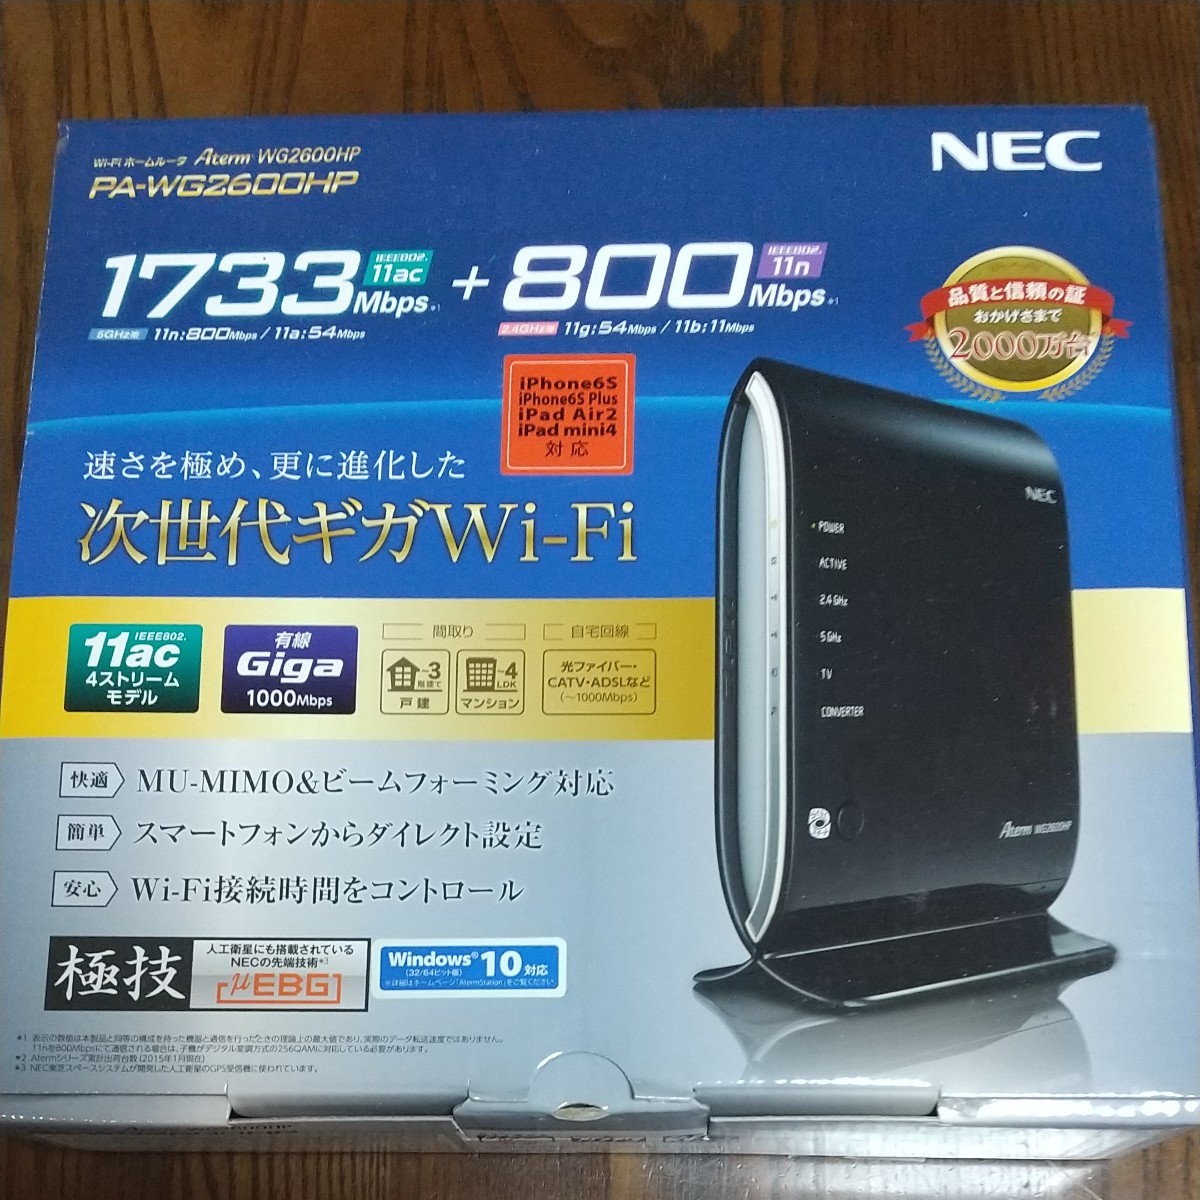 Aterm WG2600HP 無線LANルーター NEC